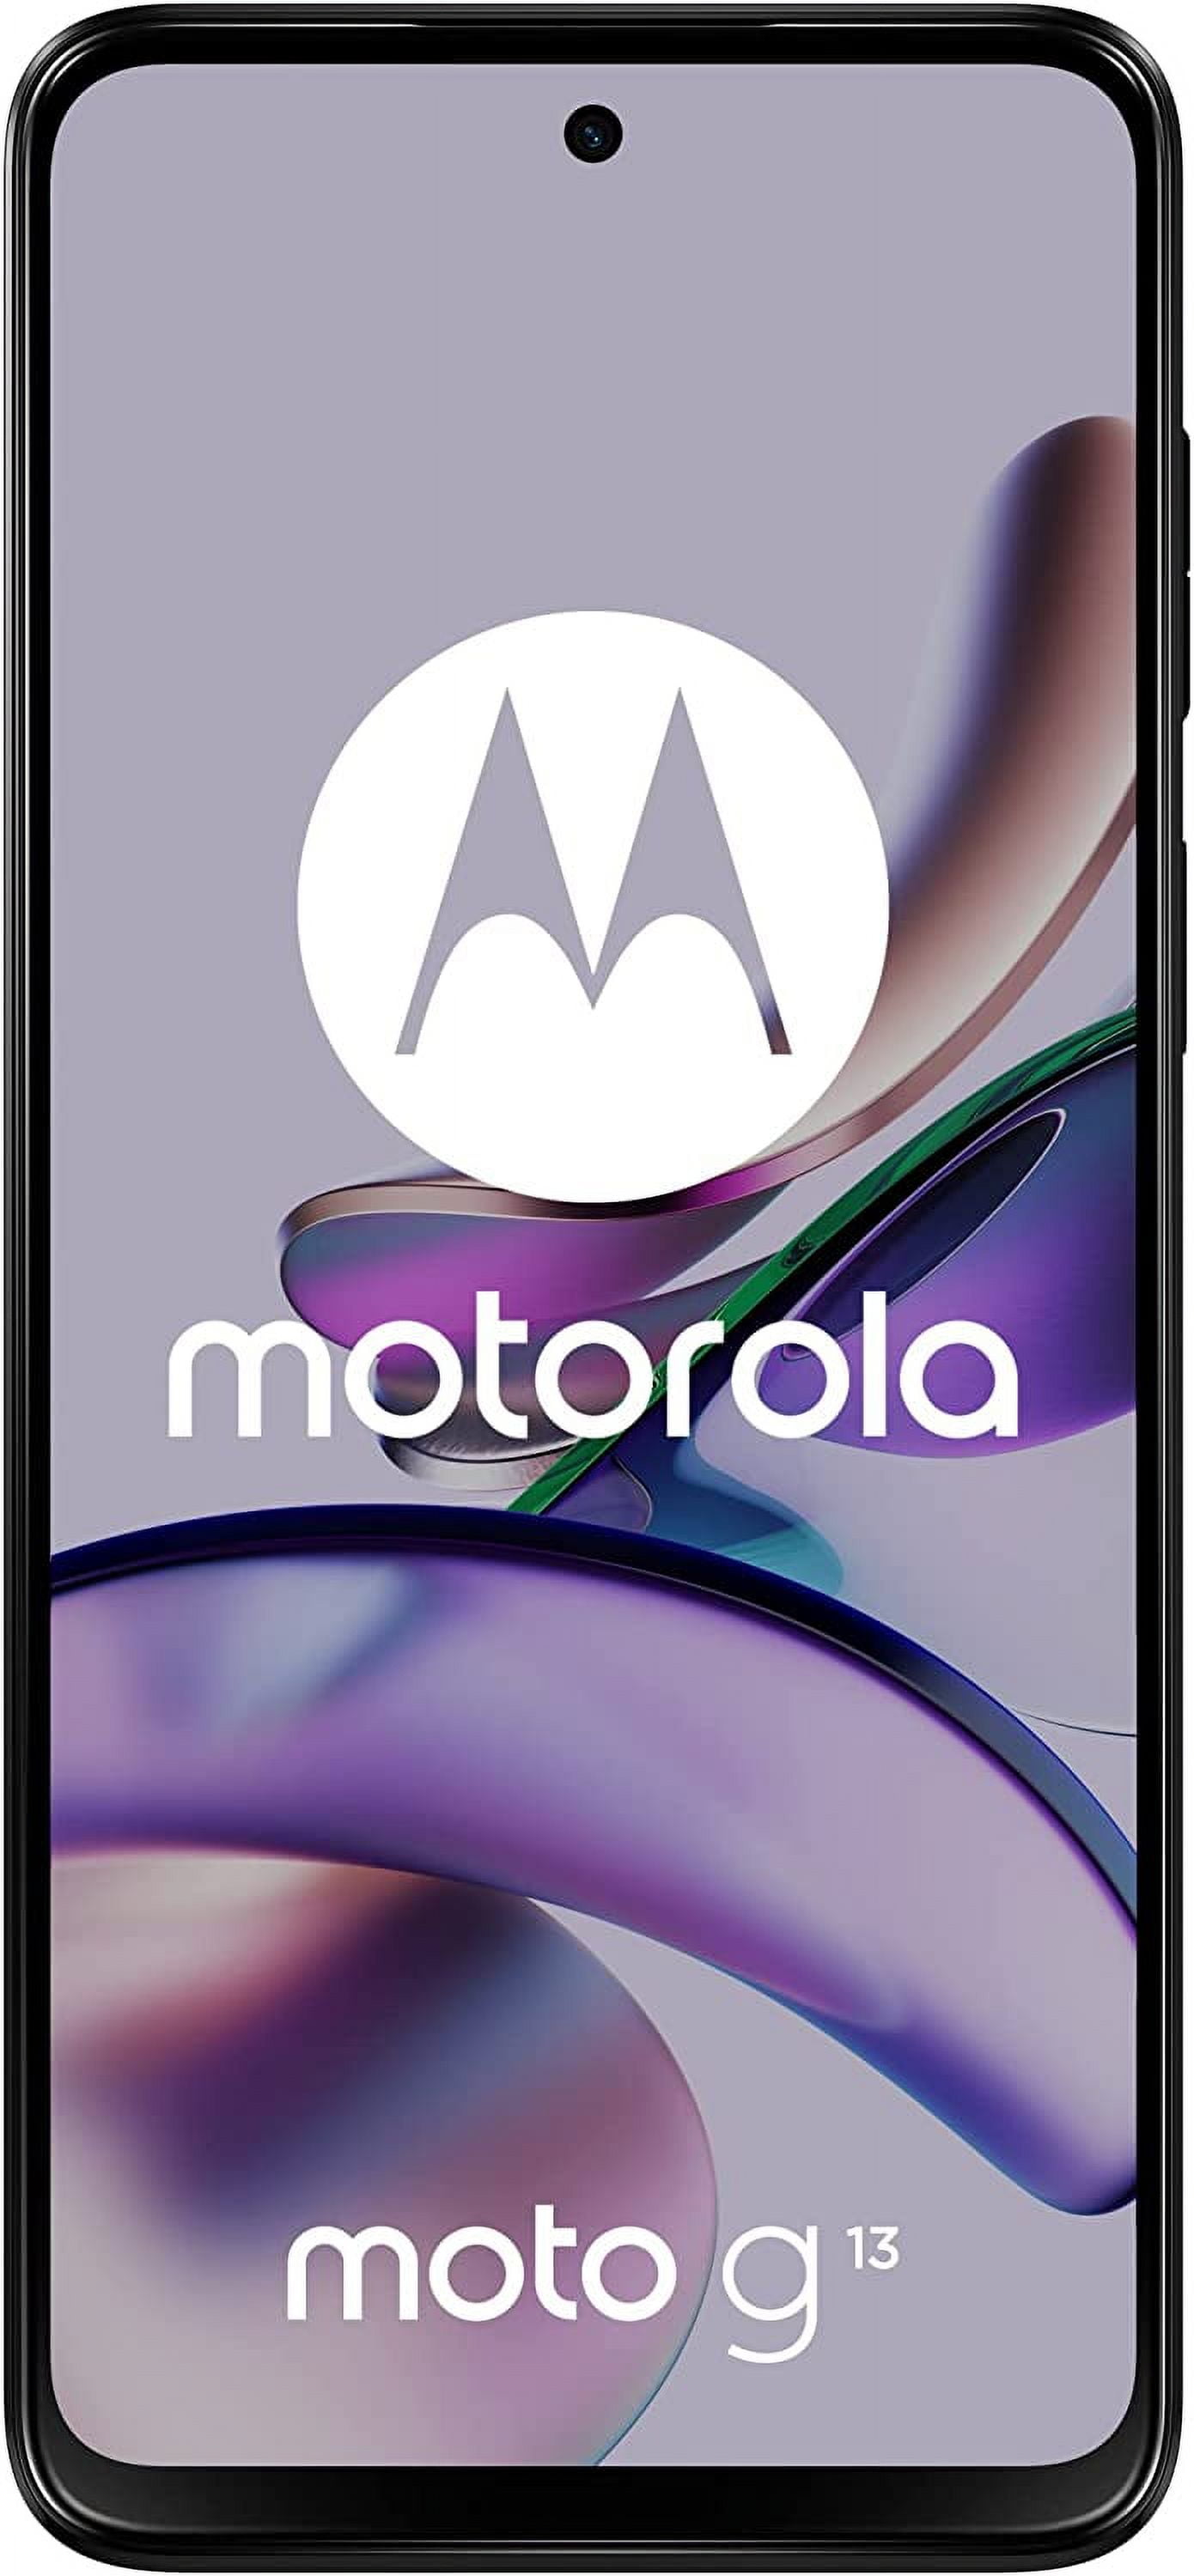 ROM (Matte Charcoal) - Factory 4G 4GB International Smartphone Unlocked + 128GB Version Dual G13 SIM Moto Motorola RAM